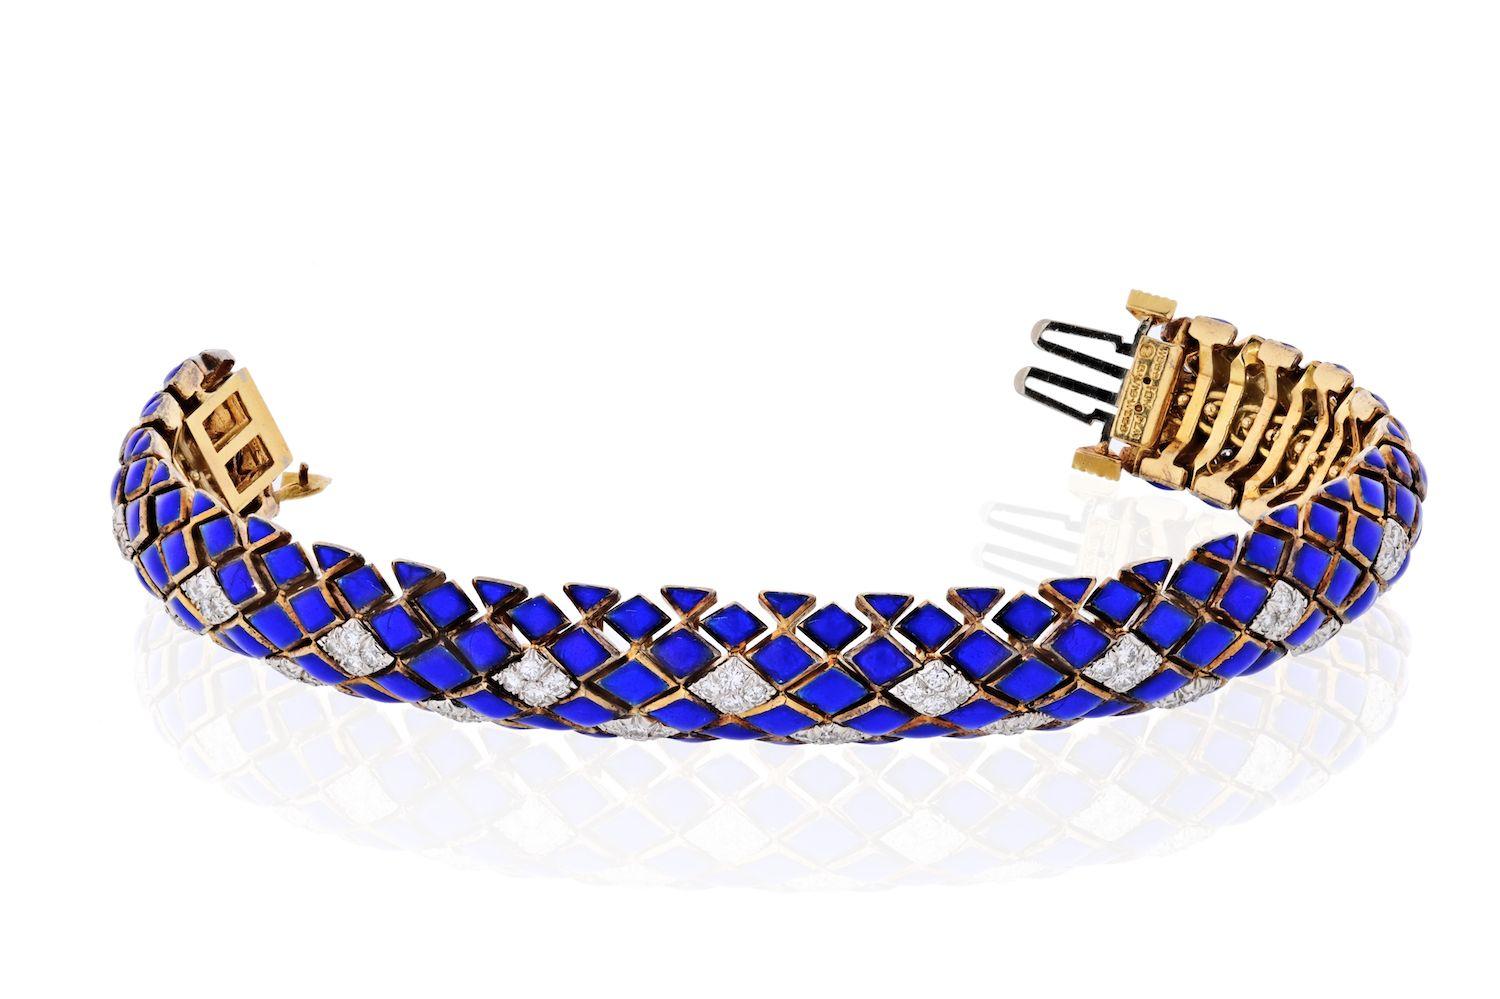 Diamond, enamel and eighteen karat gold bracelet, David Webb convex diamond shape links in blue enamel highlighted by round brilliant-cut diamond set links; estimated total diamond weight: 2.30 carats. Length 7 inches. Width: 15mm. Condition: